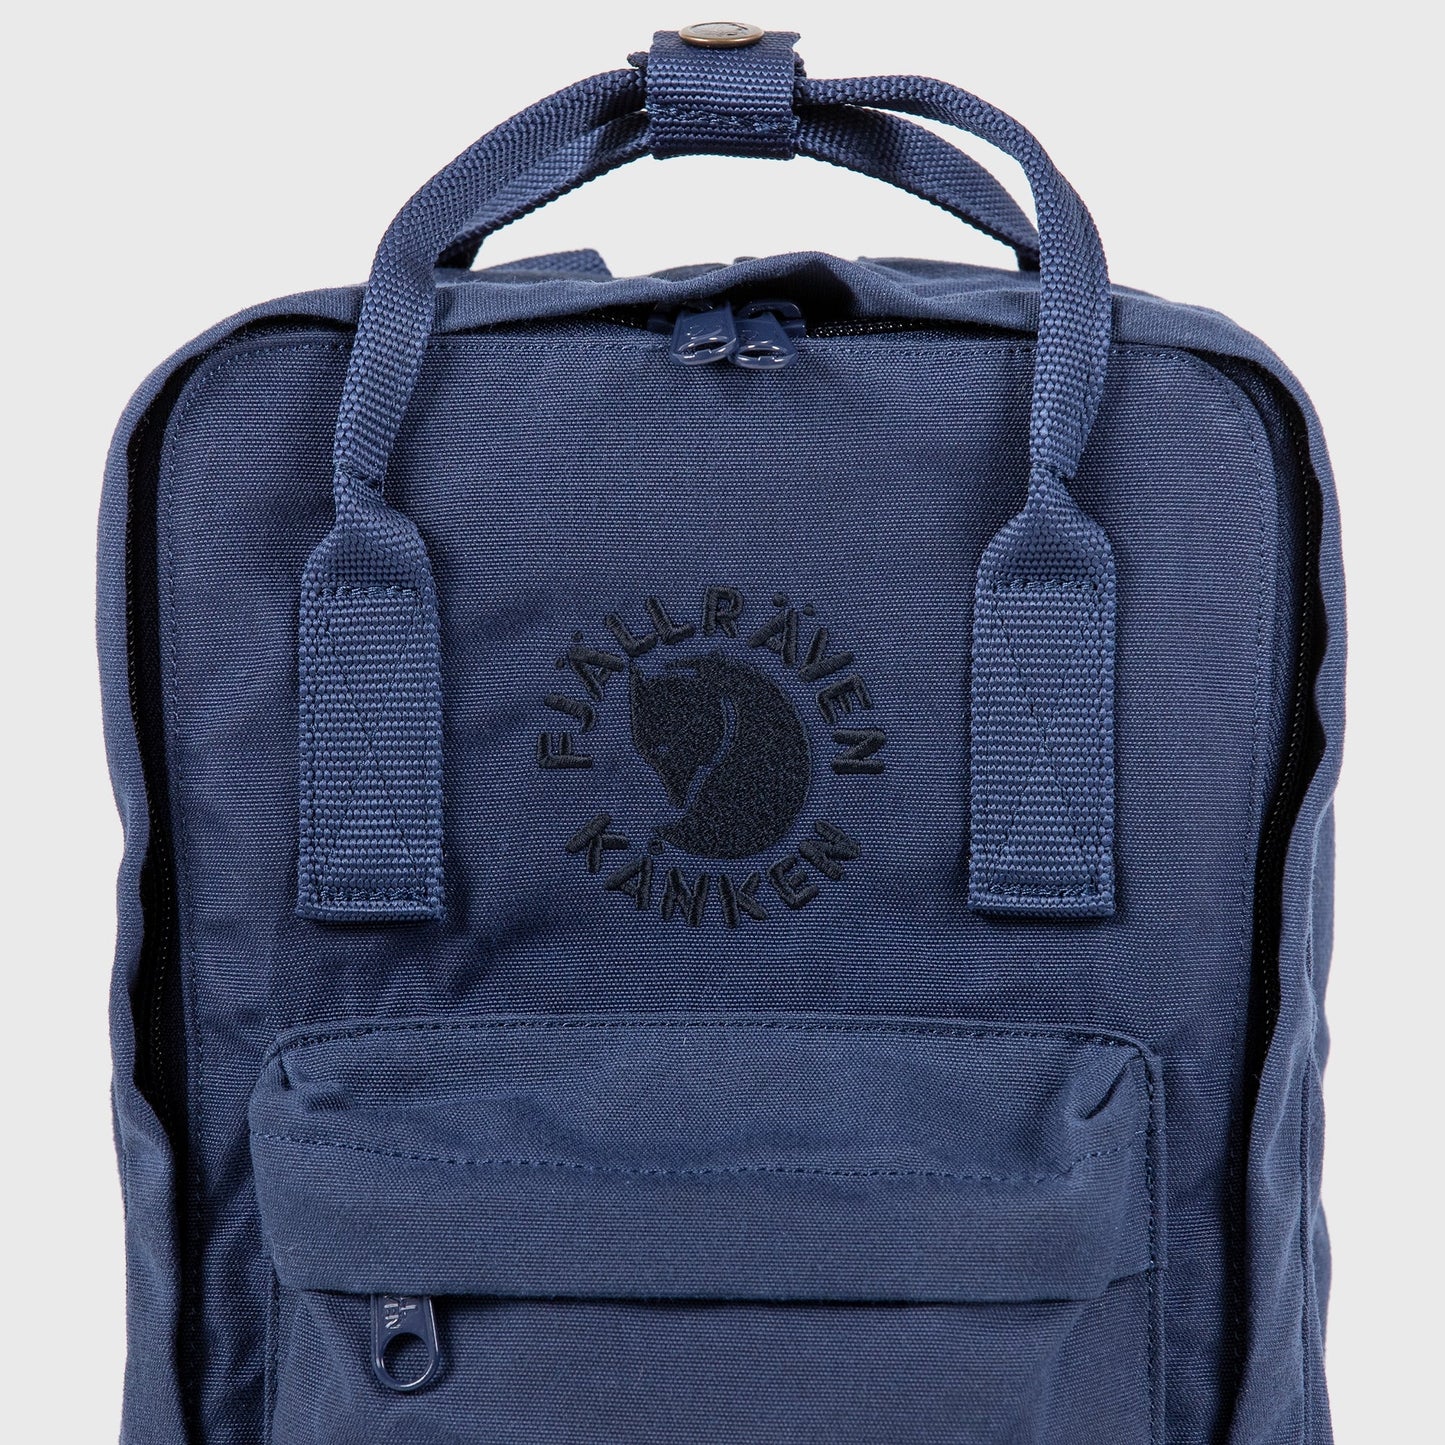 FJÄLLRÄVEN - 瑞典北極狐【狐狸袋】RE-KÅNKEN Mini 7L 迷你背囊 School bag outdoor backpack 23549-525 UN BLUE